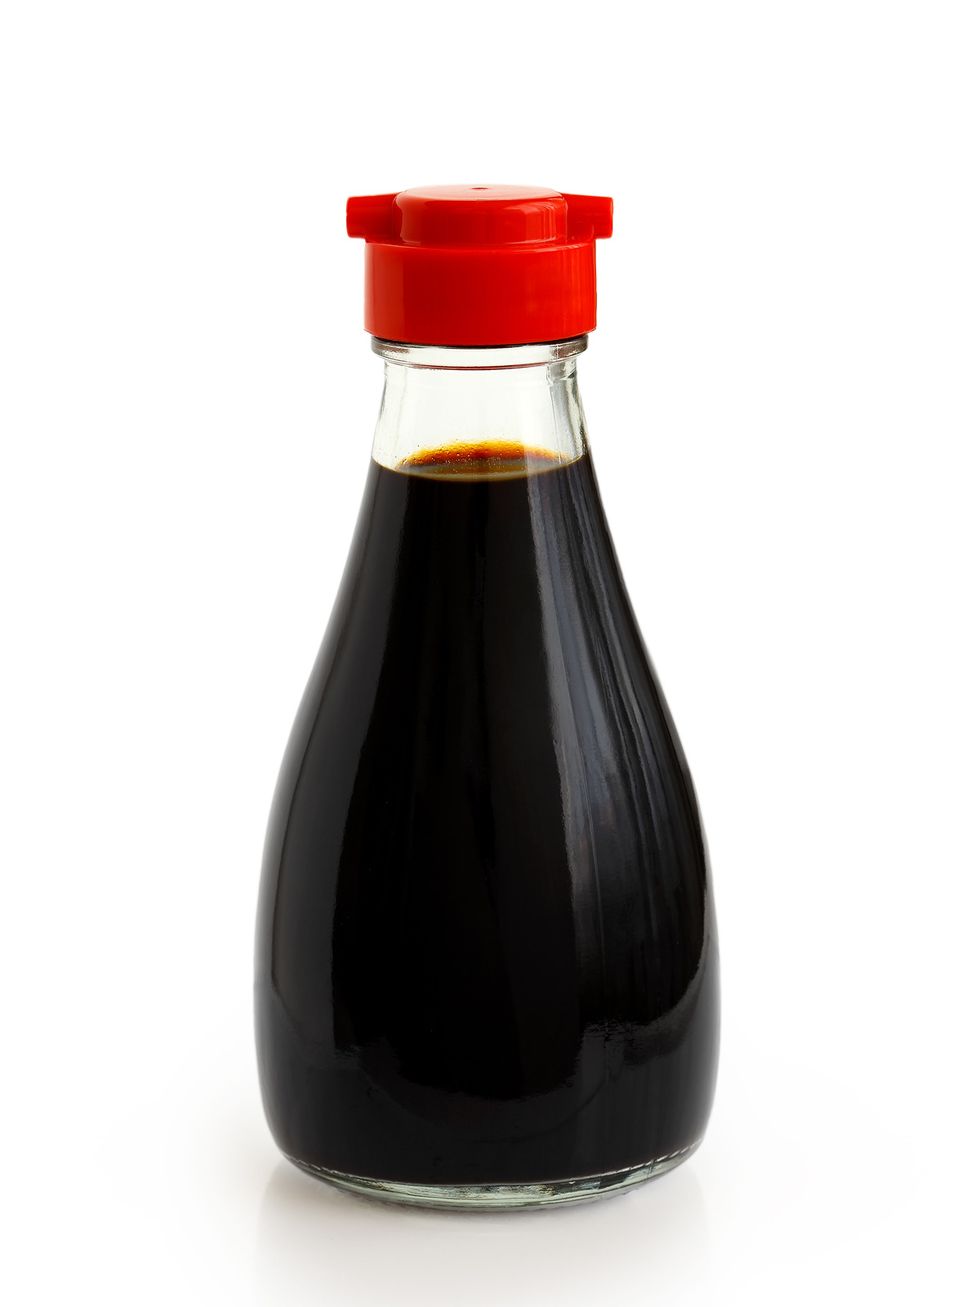 Liquid, Bottle, Ingredient, Bottle cap, Red, Condiment, Maroon, Glass bottle, Sauces, Syrup, 